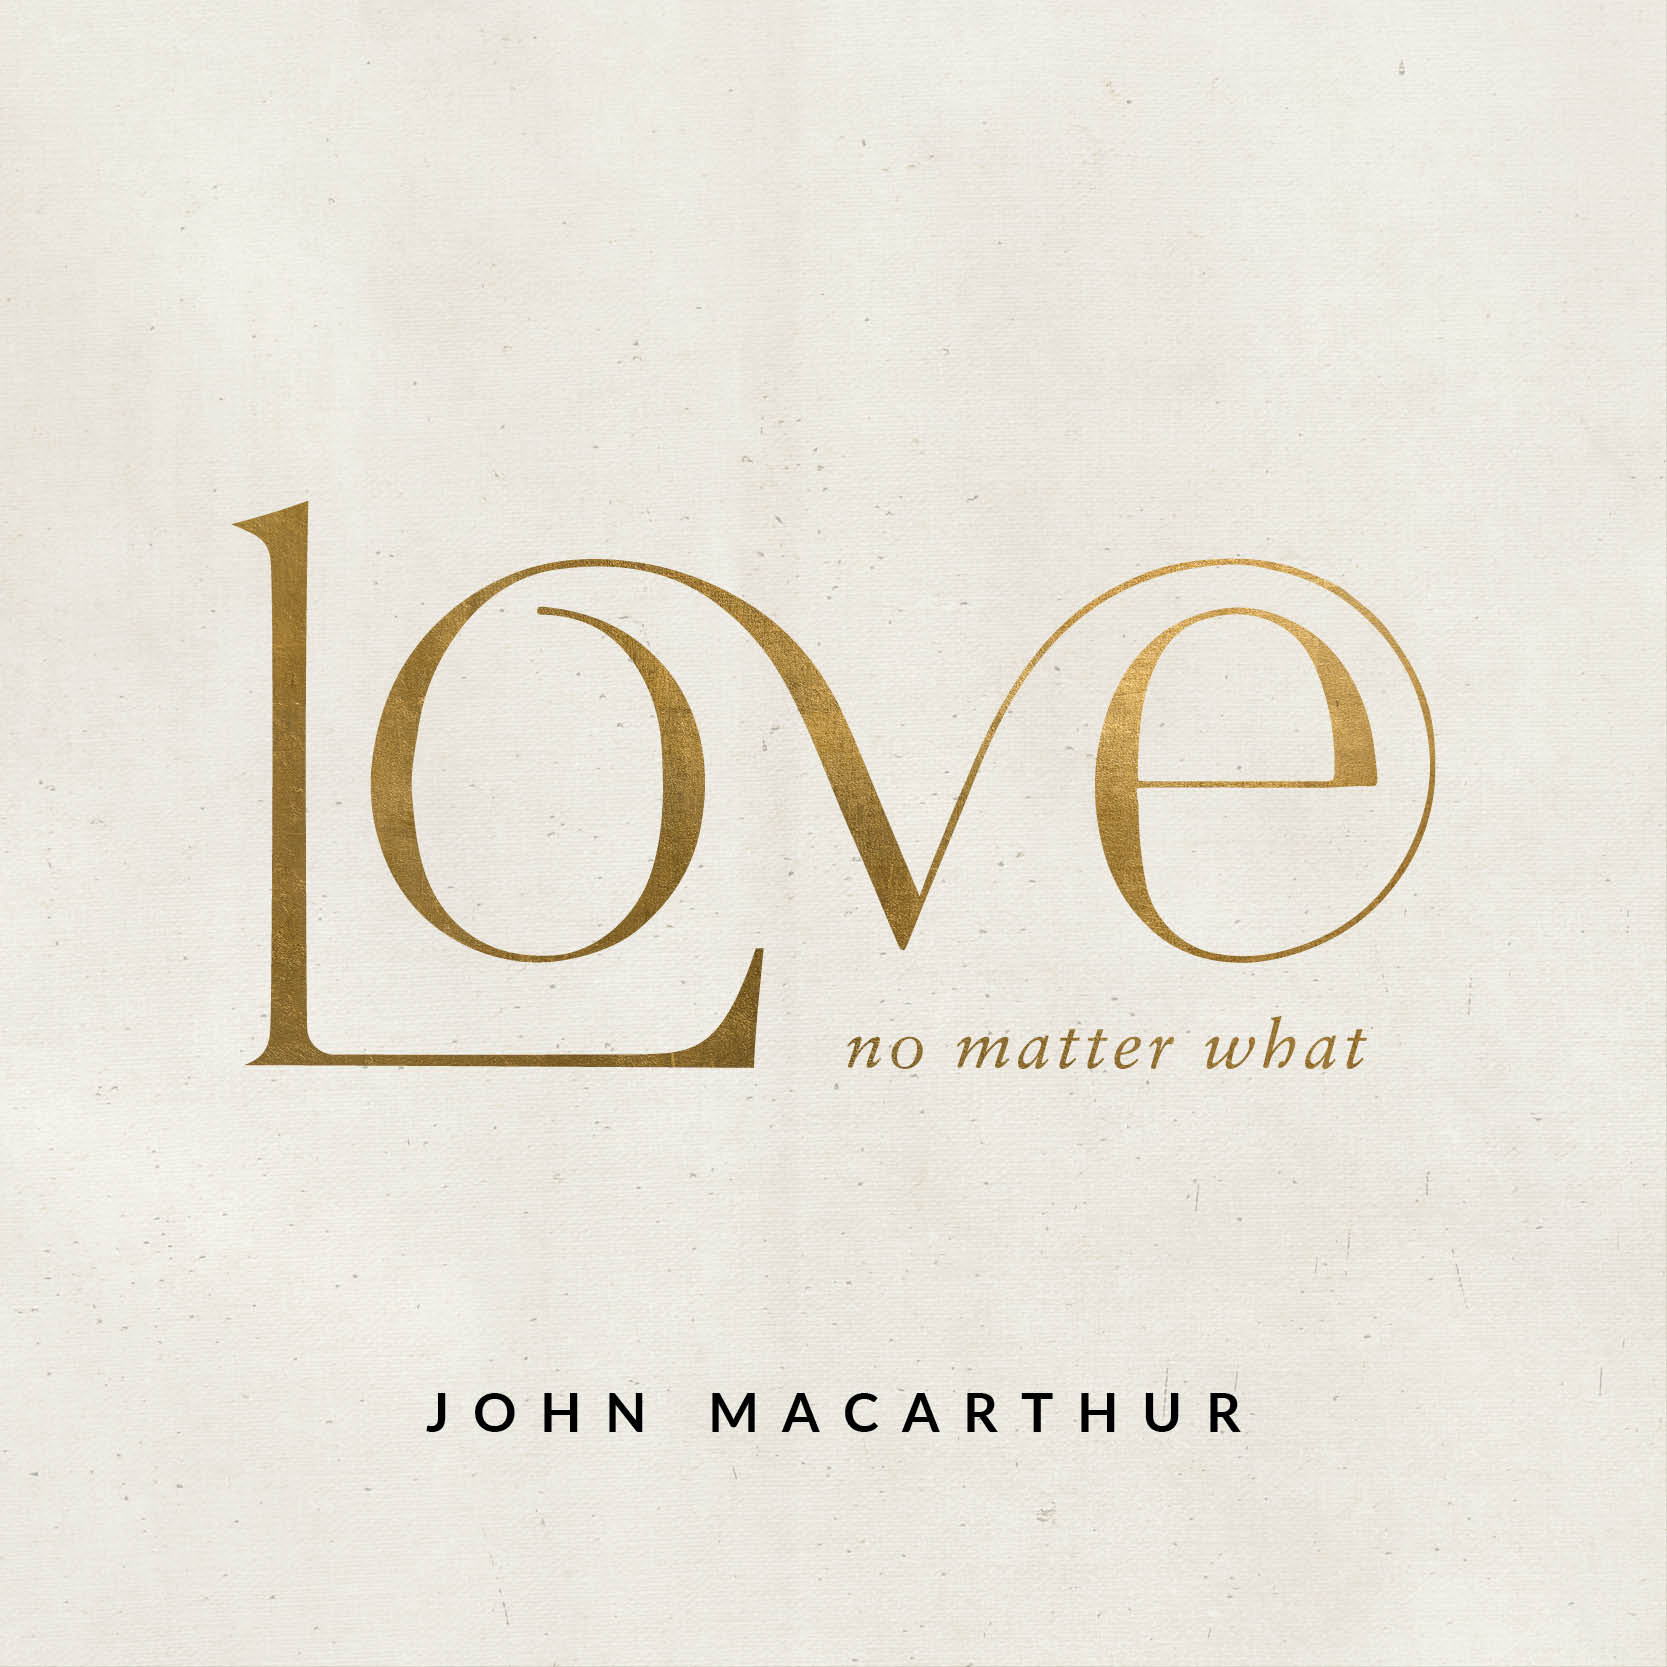 Love no matter what